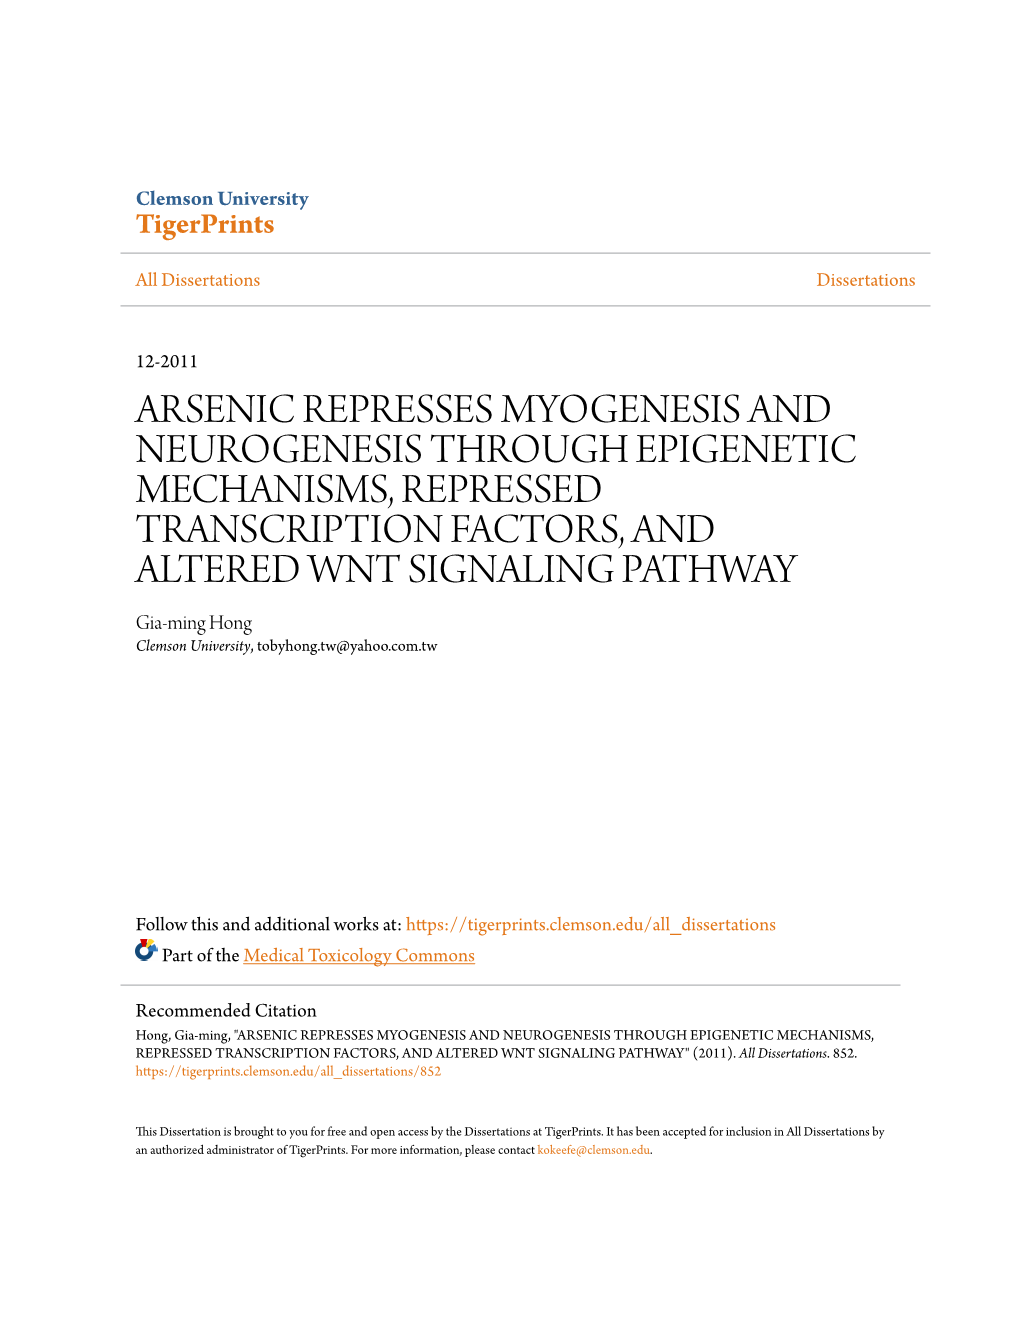 Arsenic Represses Myogenesis And